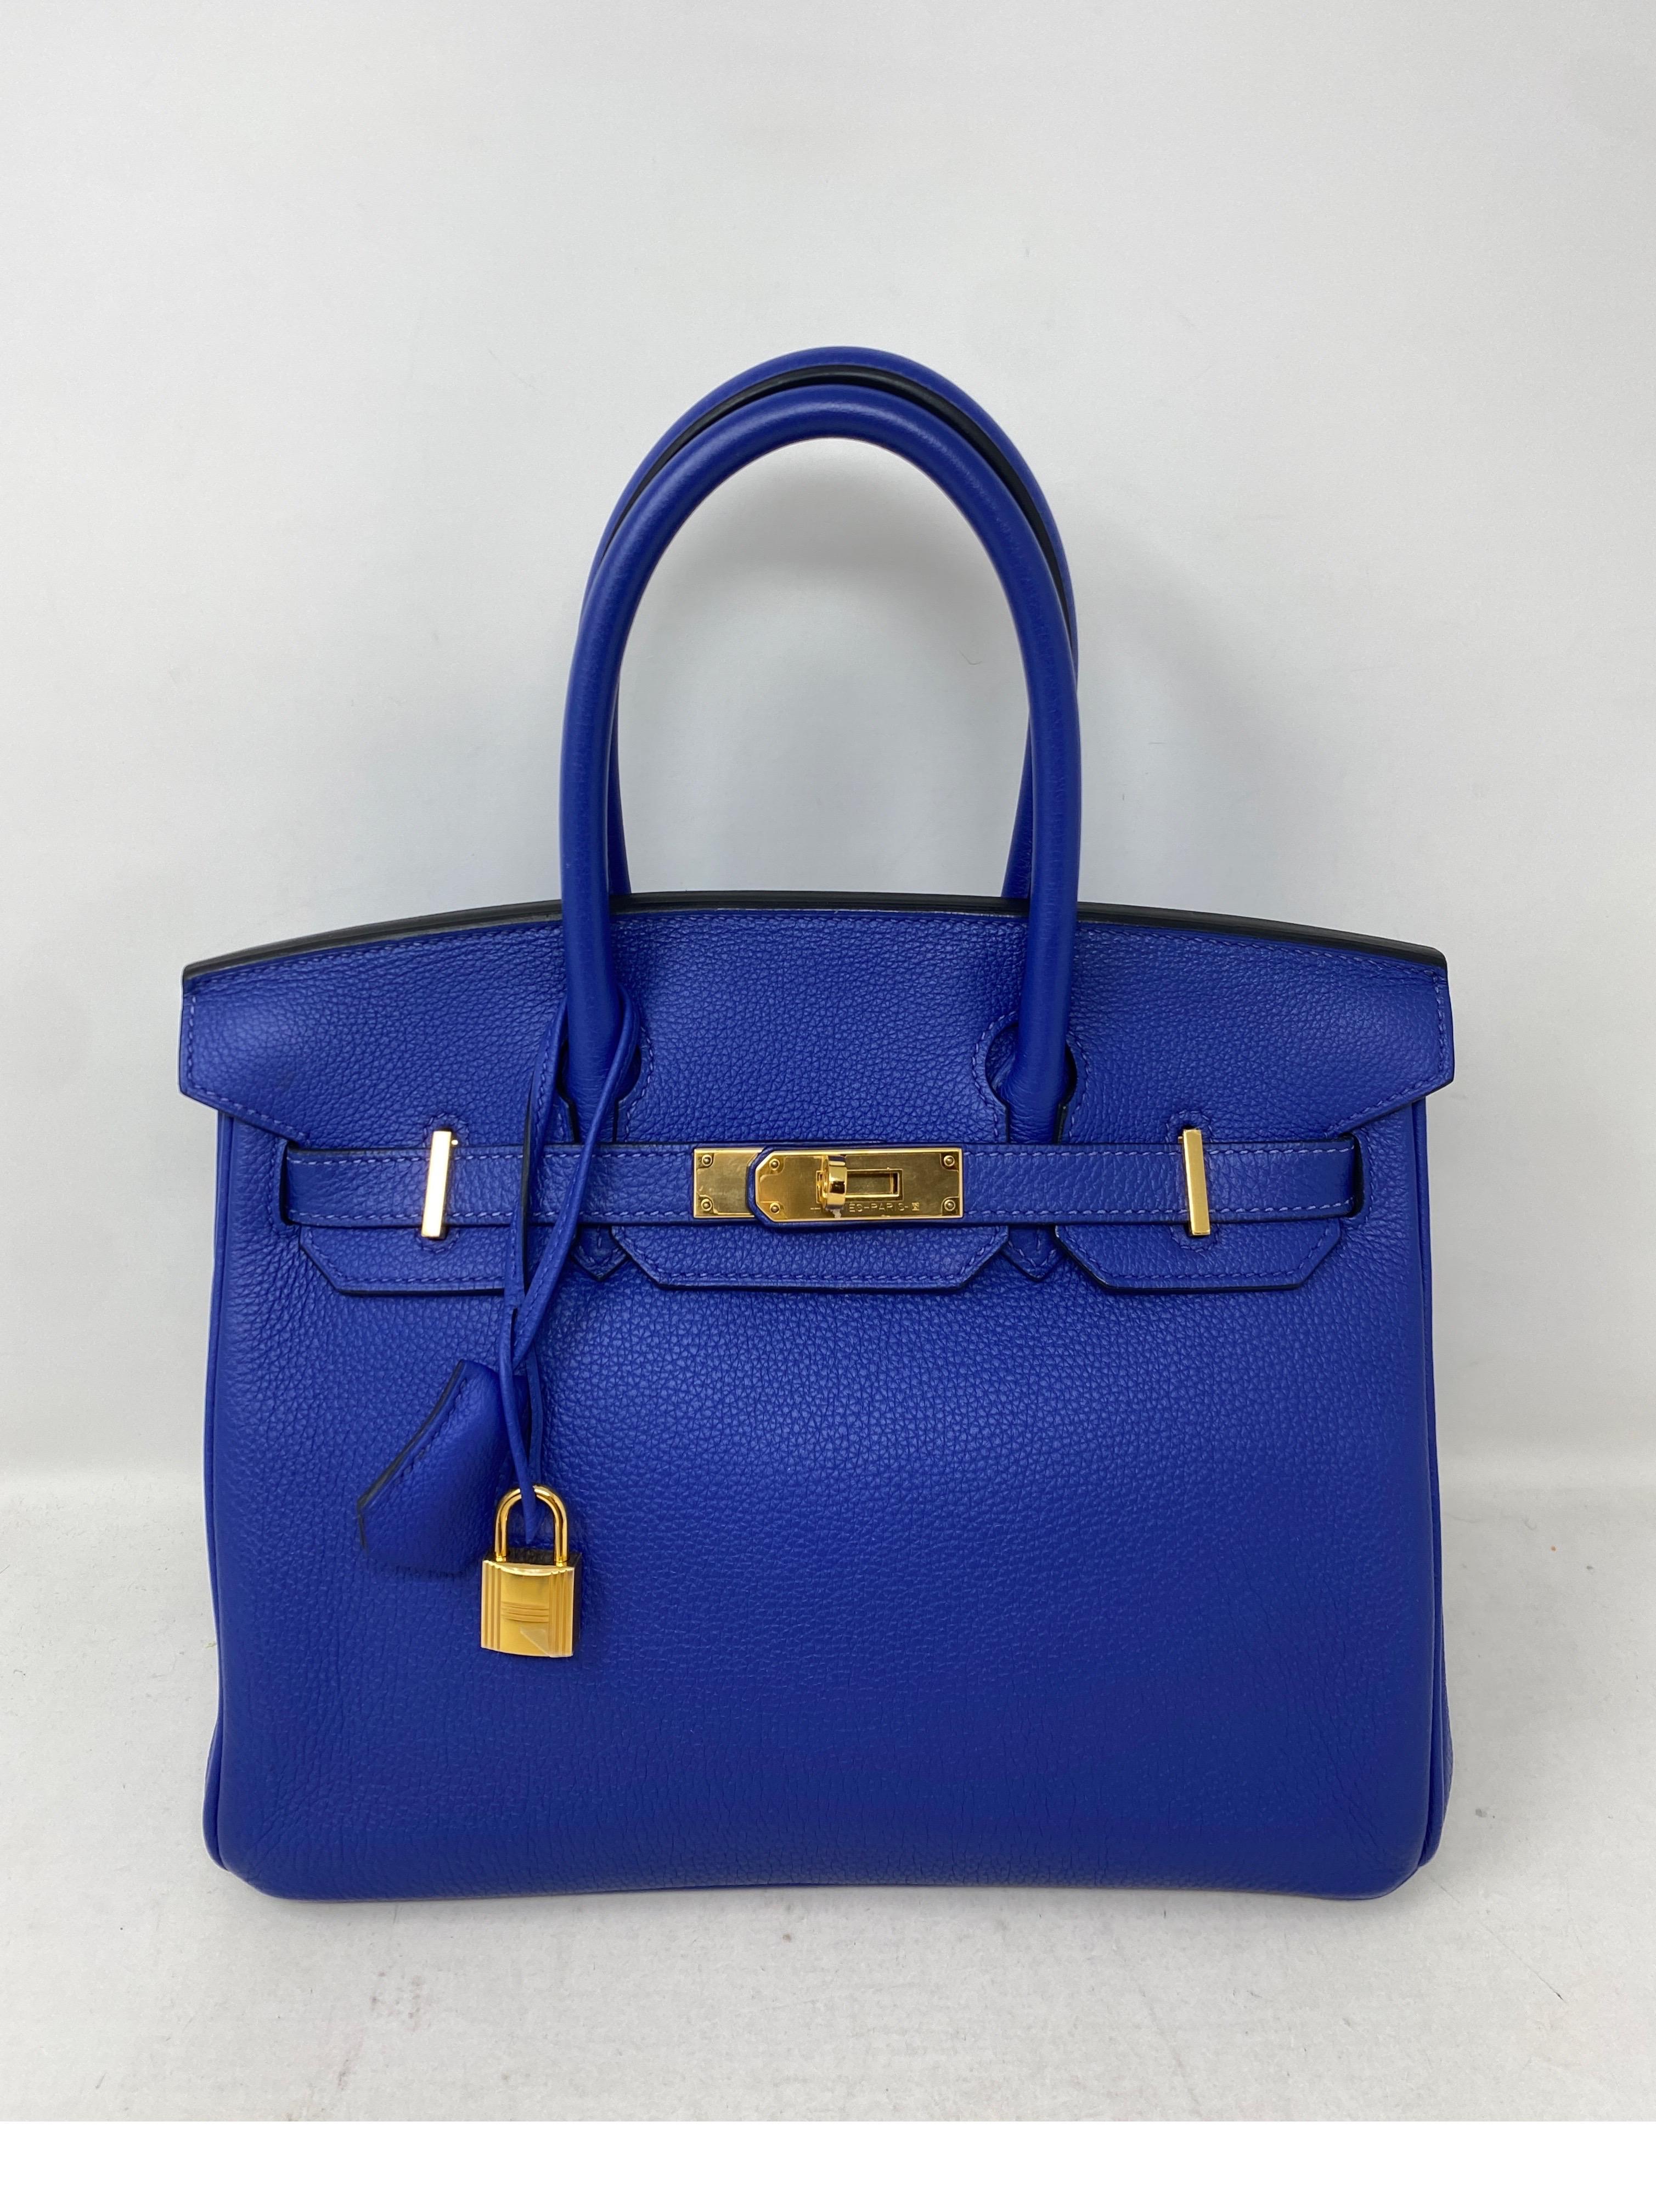 Hermès - Sac Birkin 35 Electrique bleu  12